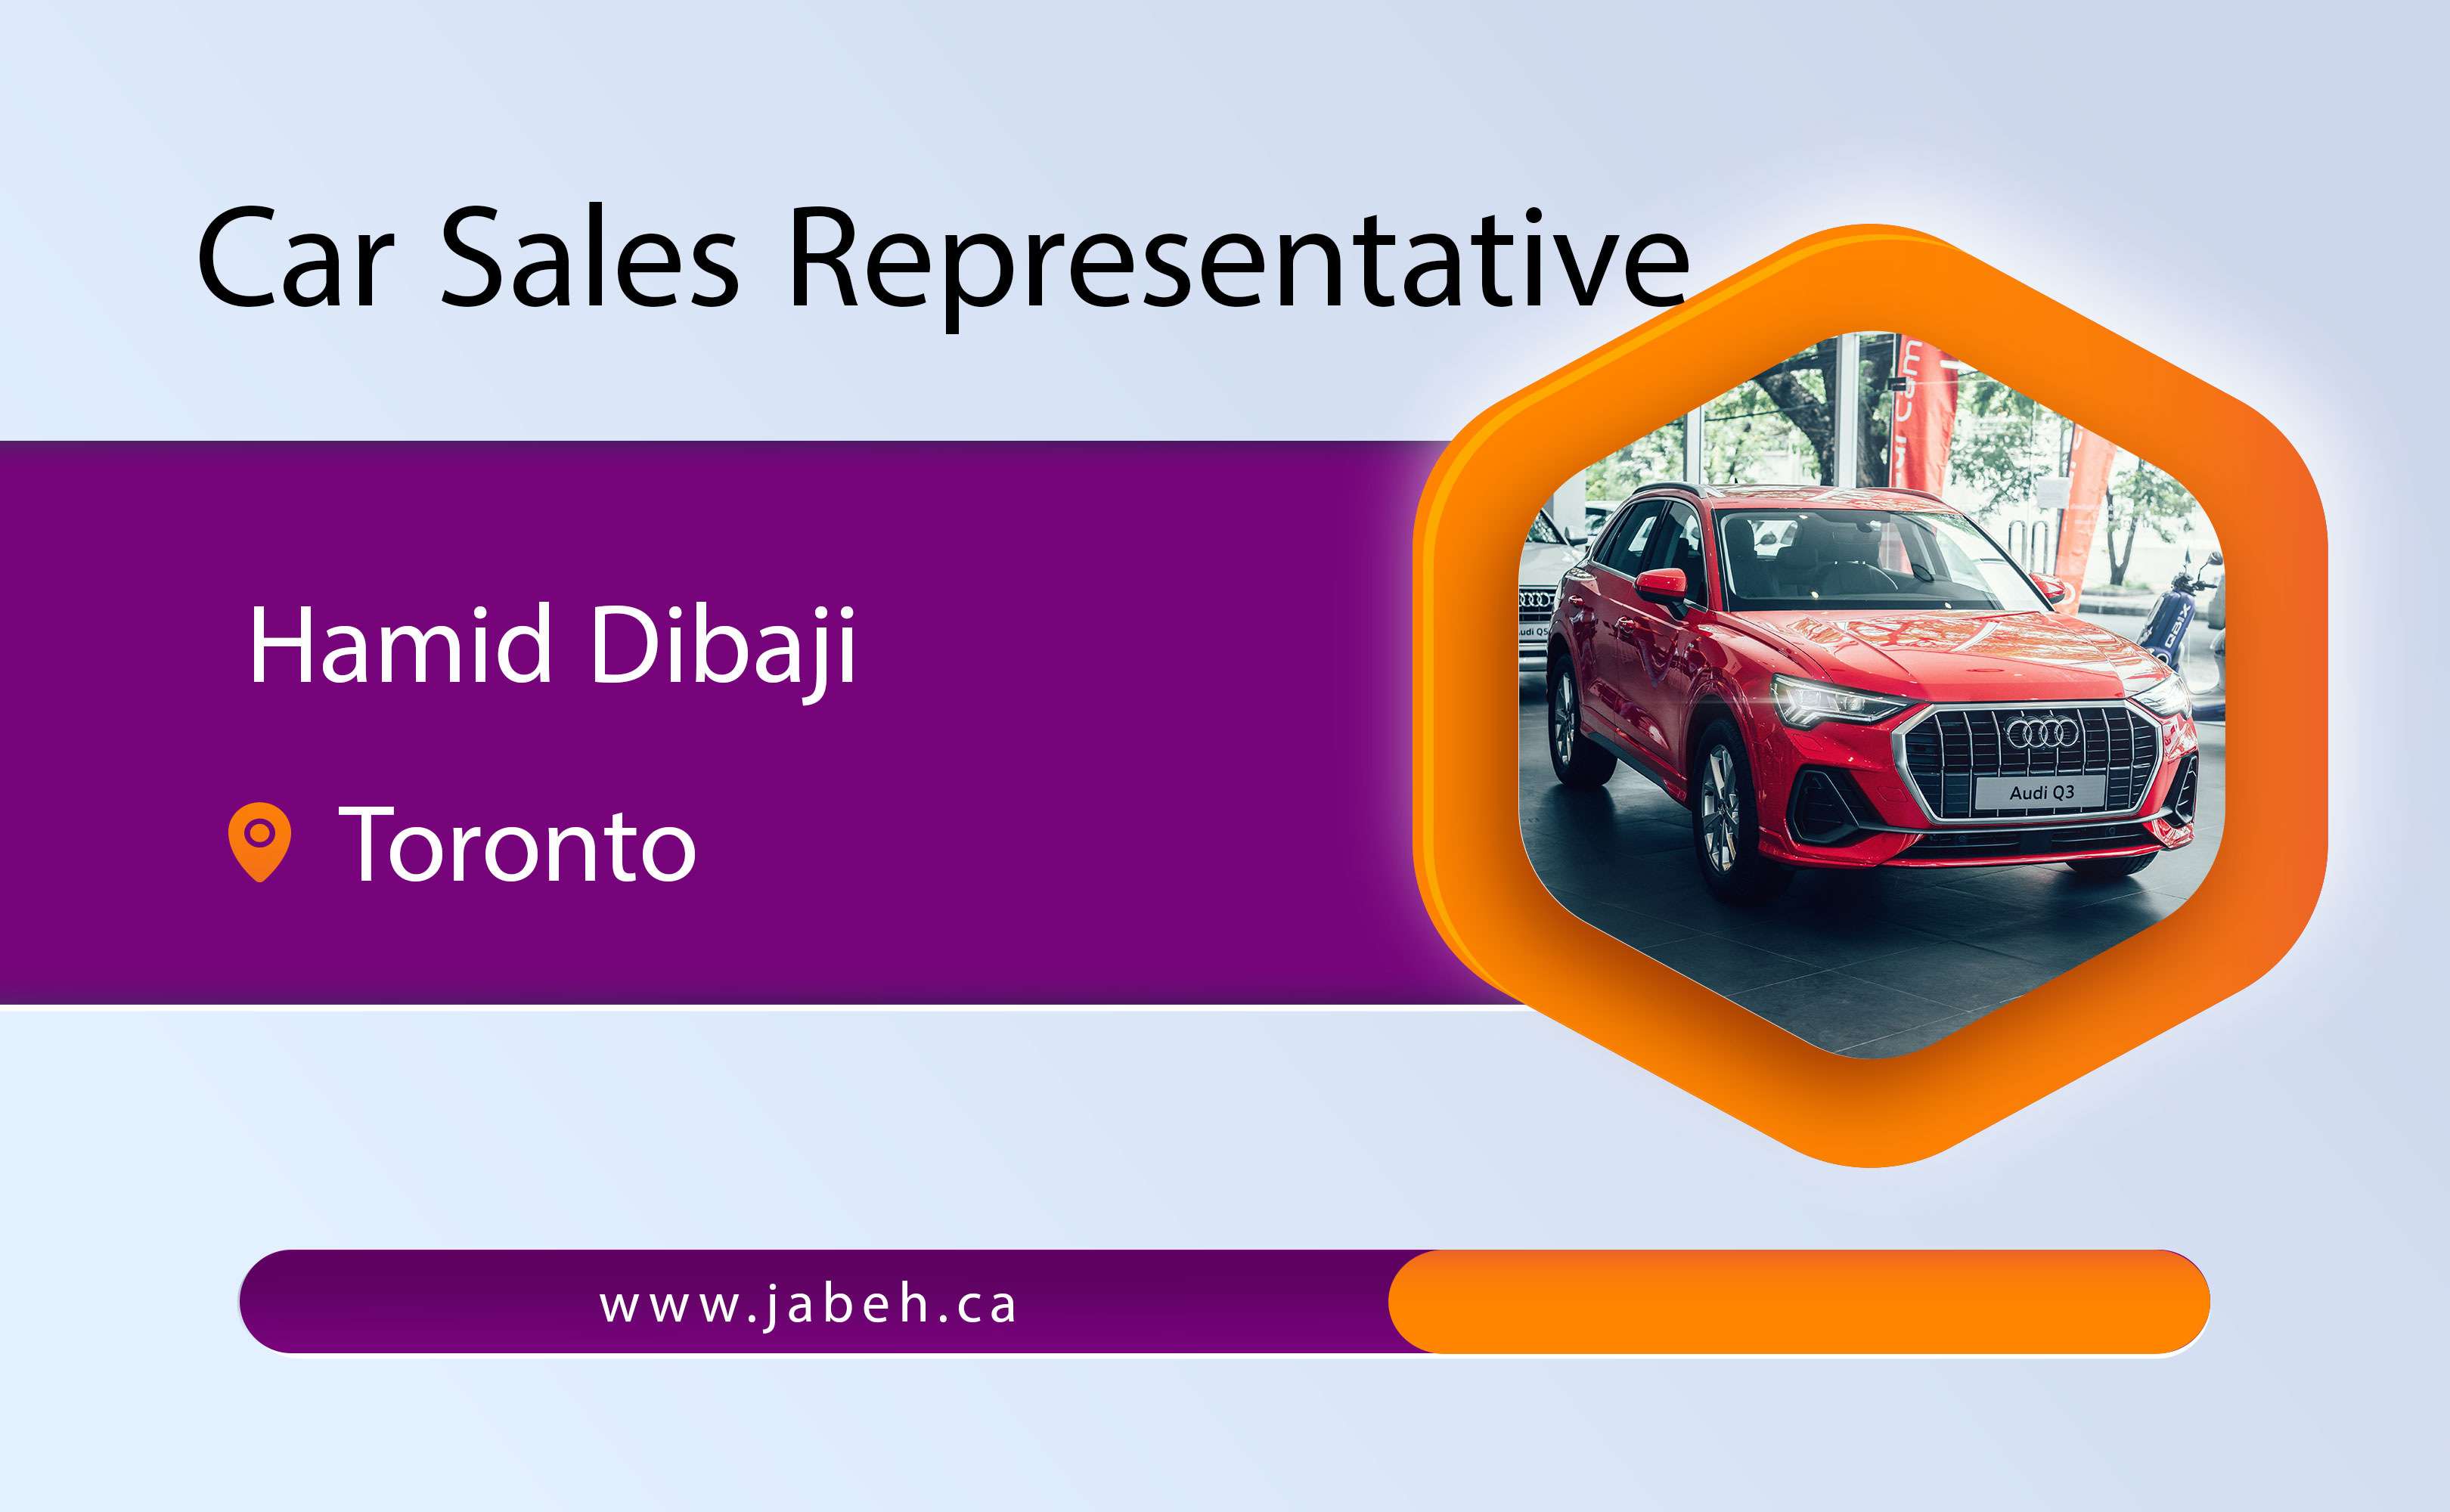 Iranian car sales representative Hamid Dibaji in Toronto